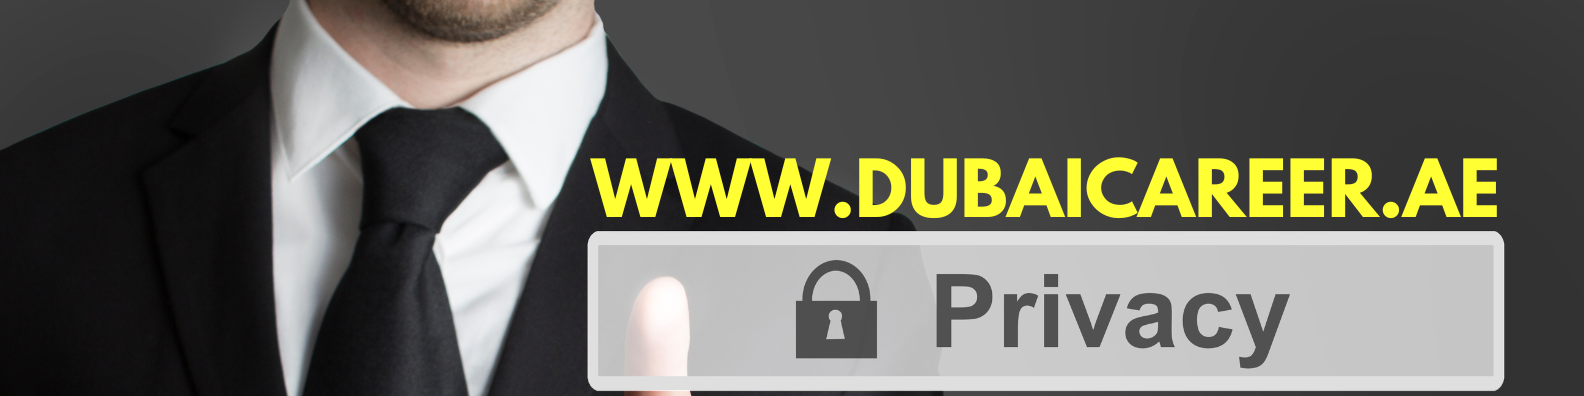 Privacy Policy for DubaiCareer.ae